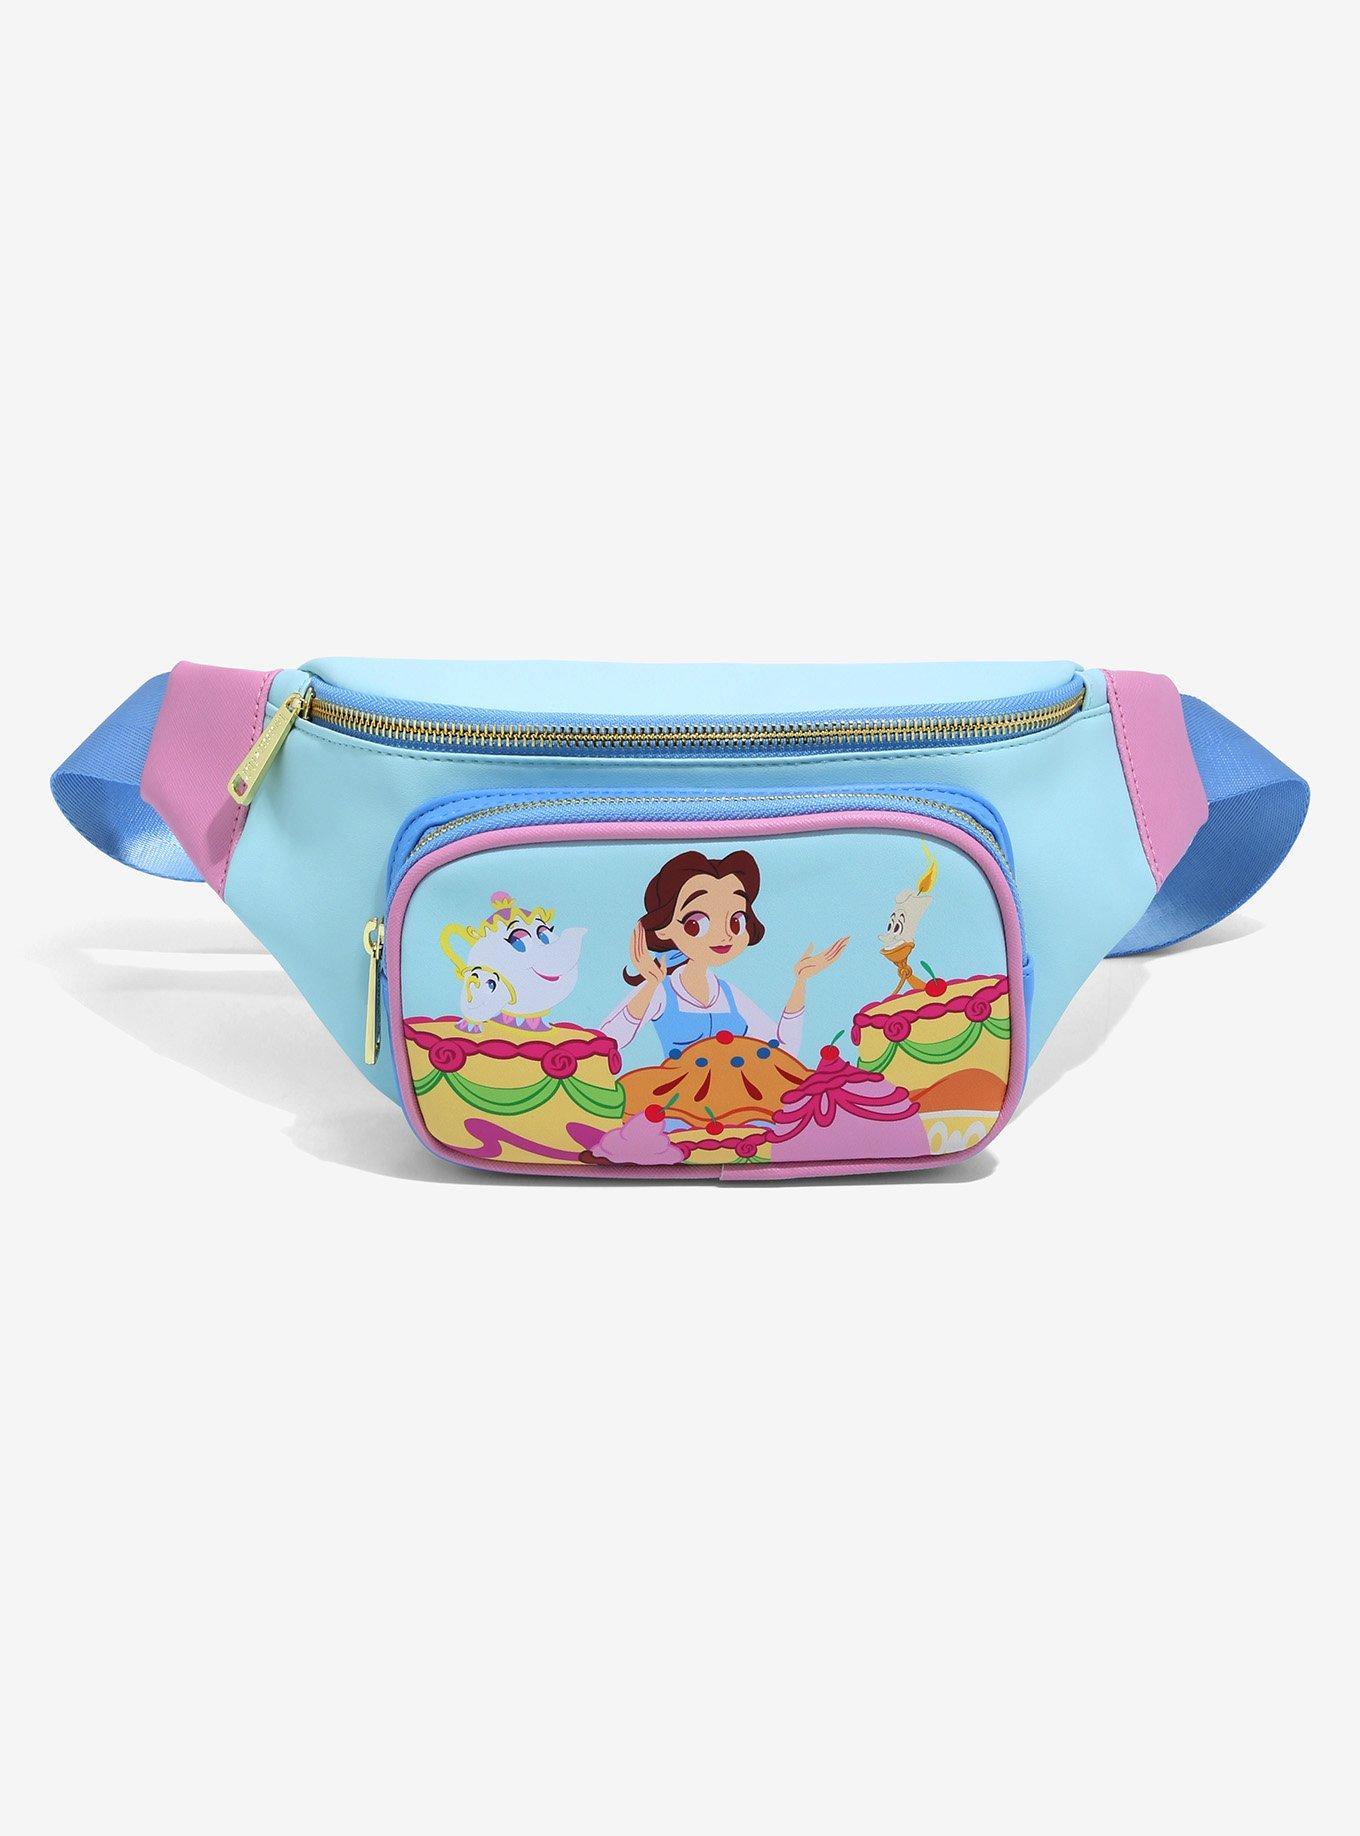 Disney Princess Fanny Pack | Disney Crossbody Bag for Moms